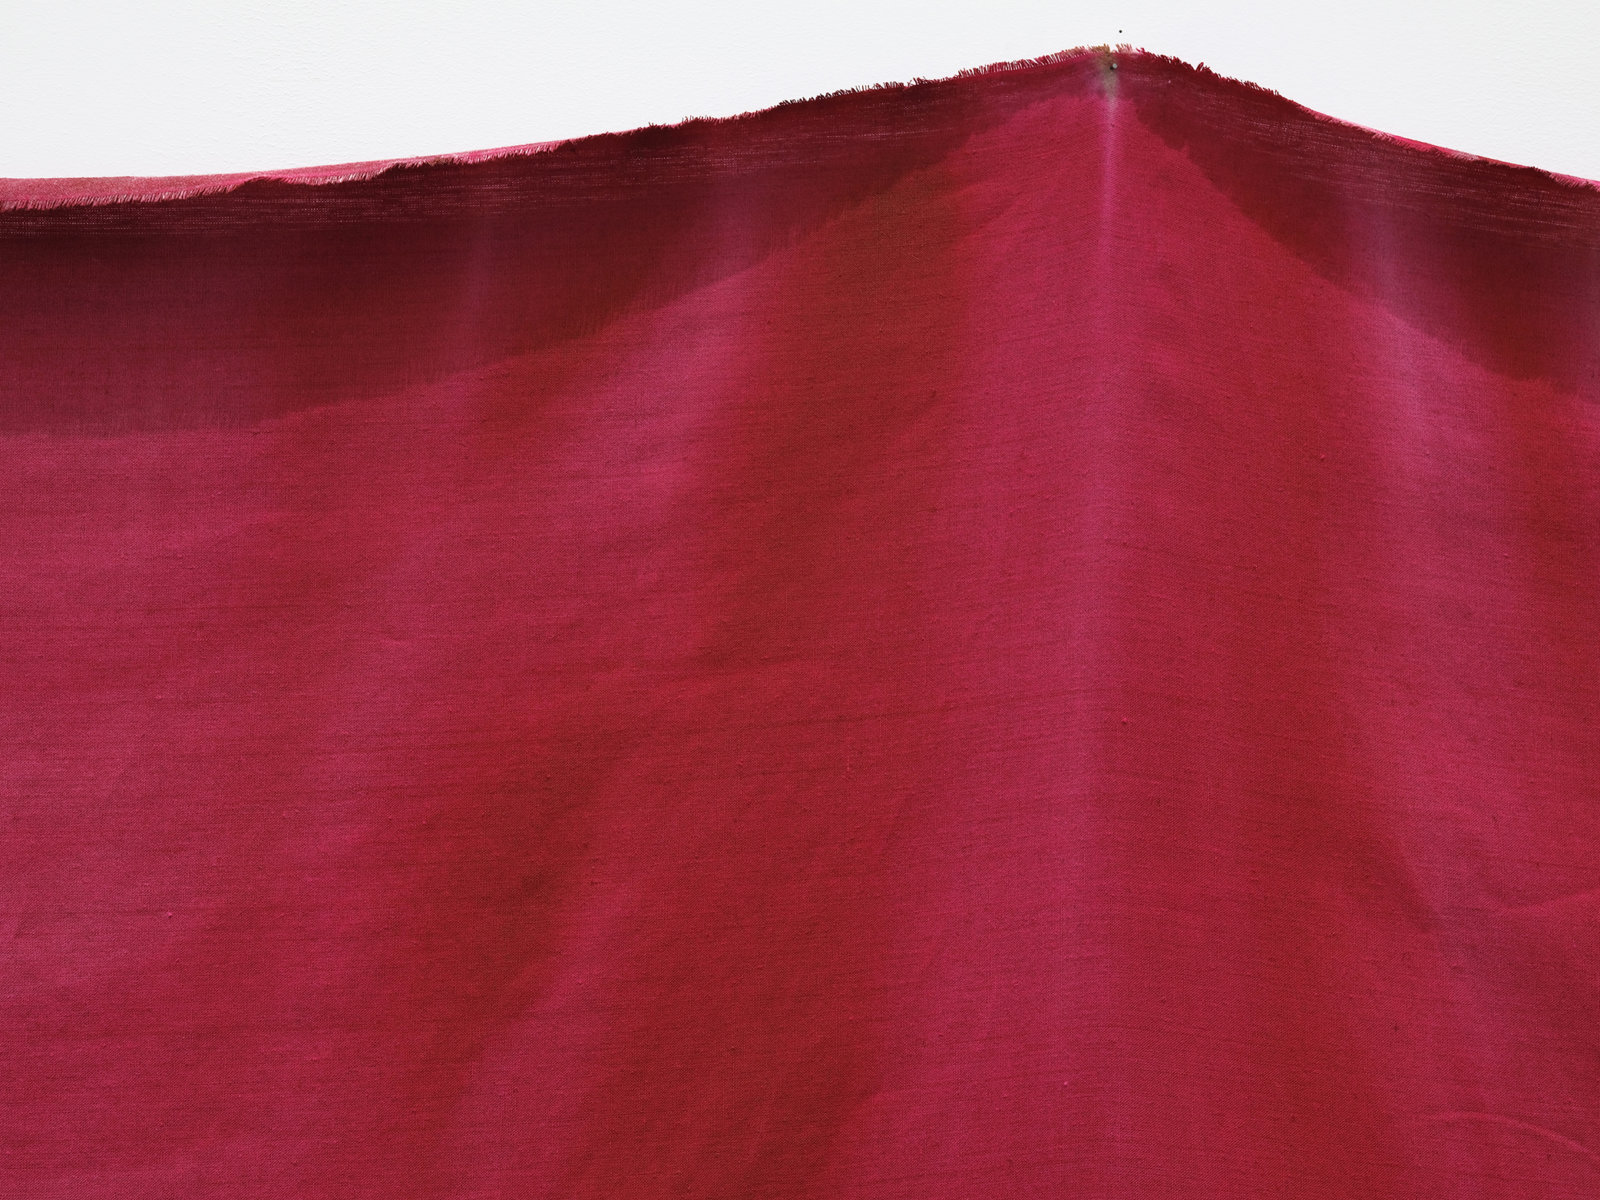 Abbas Akhavan, curtain (detail), 2021, water based pigment on linen, 95 x 101 in. (241 x 257 cm)